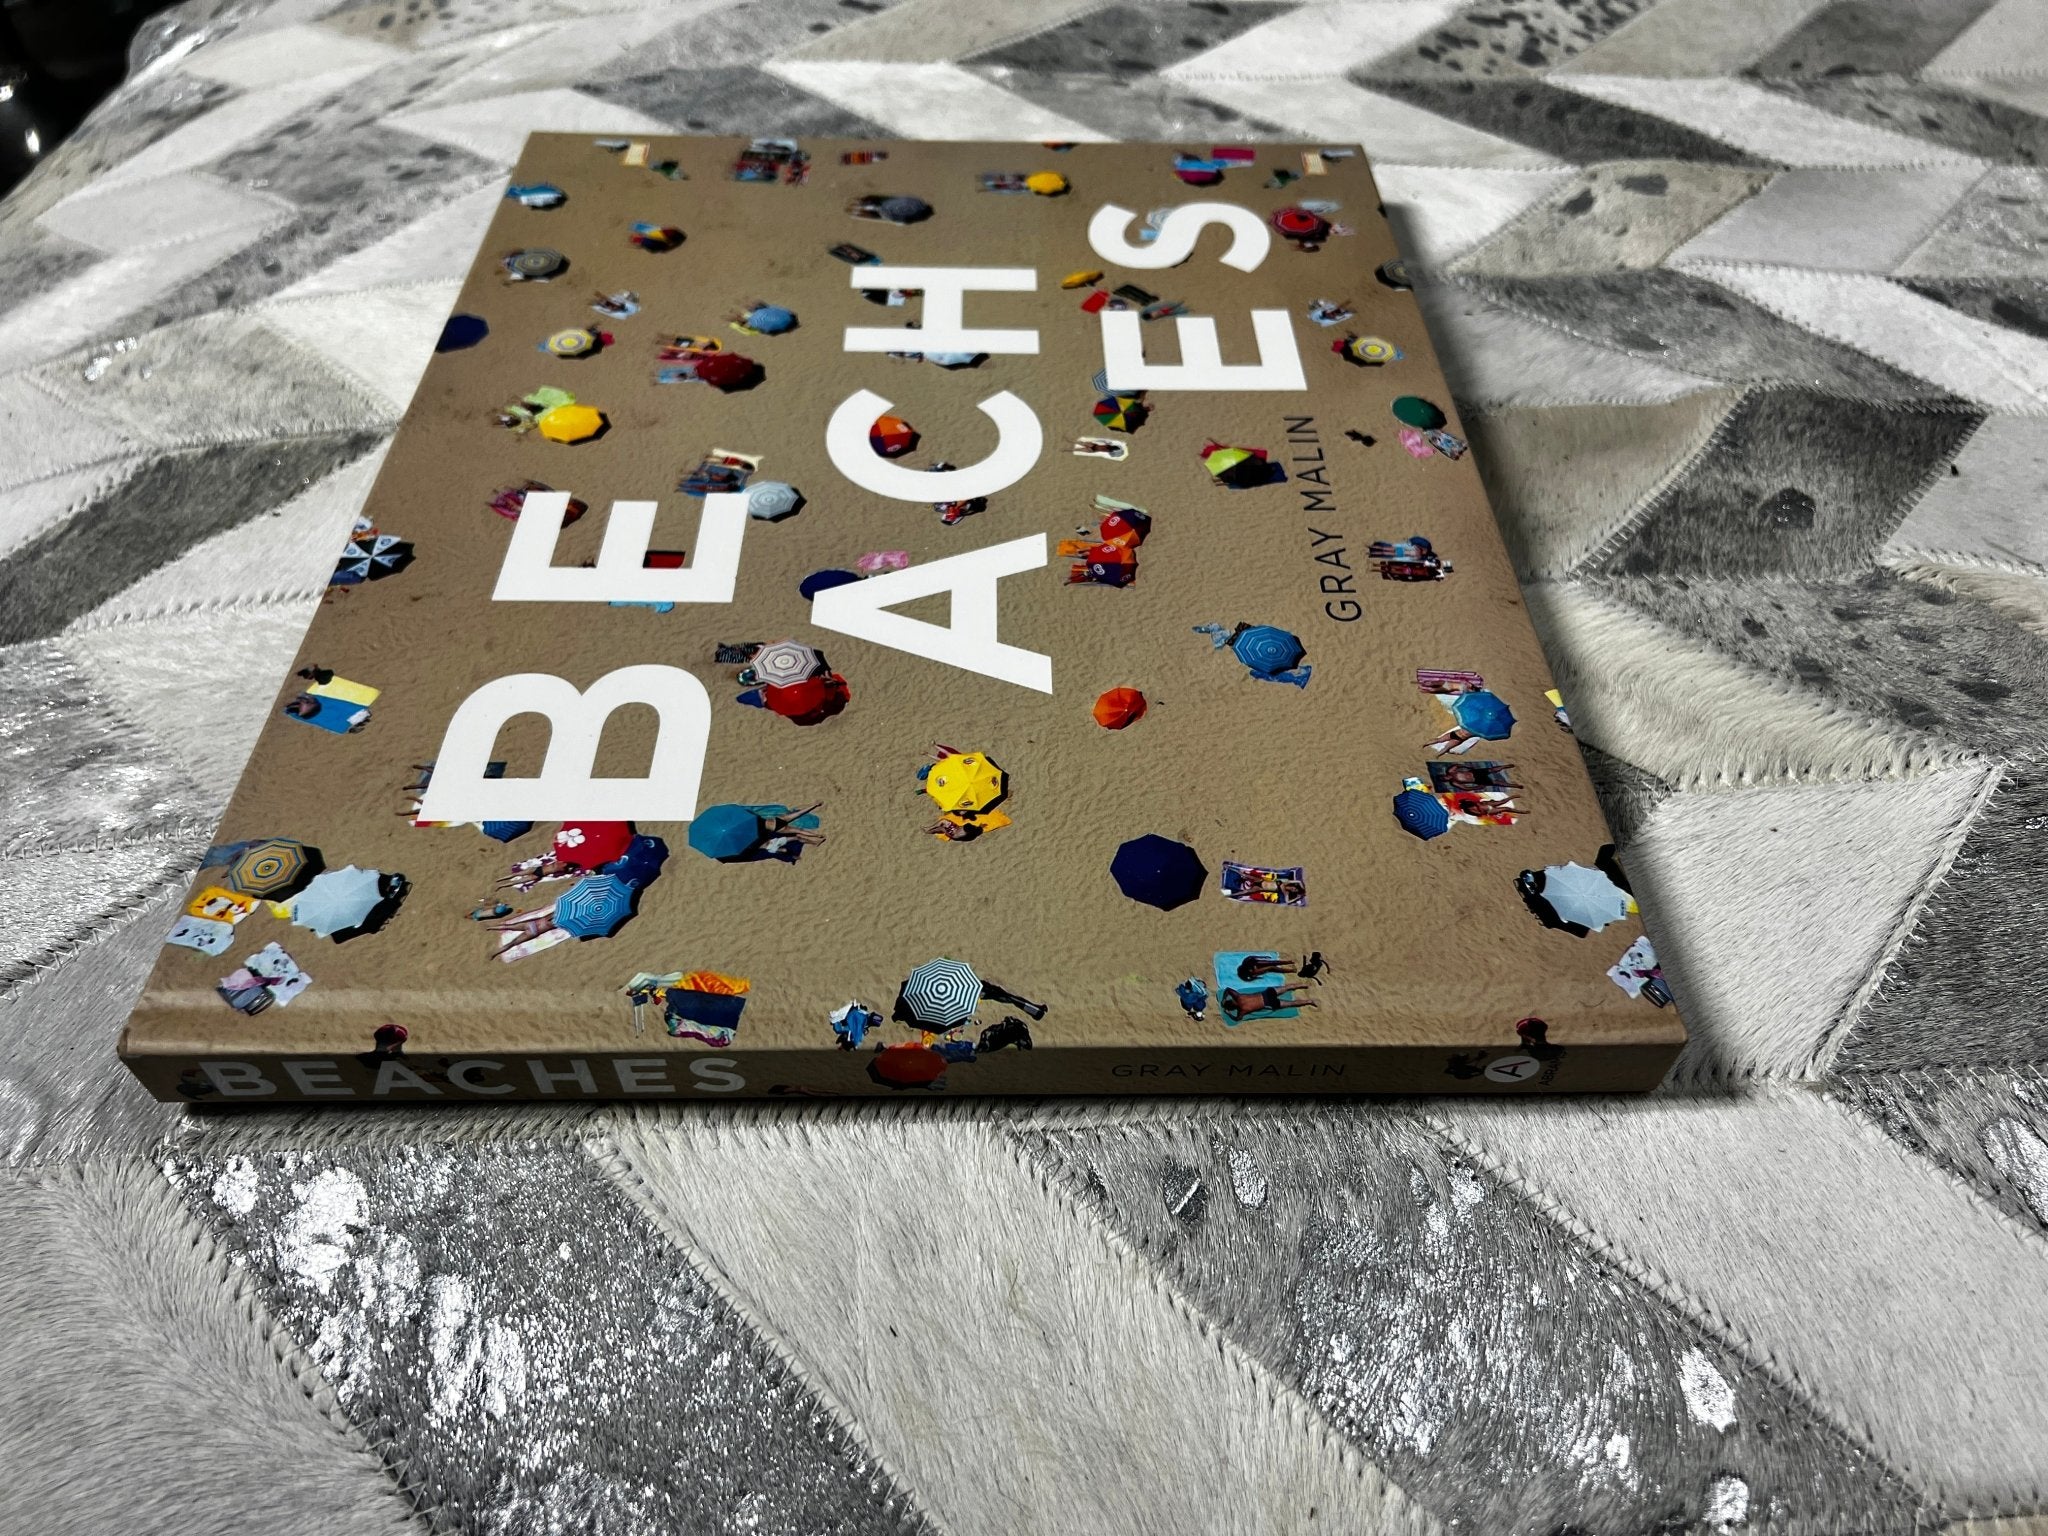 Gray Malin: Beaches Designer Coffee Table Book | Banana Manor Rug Company